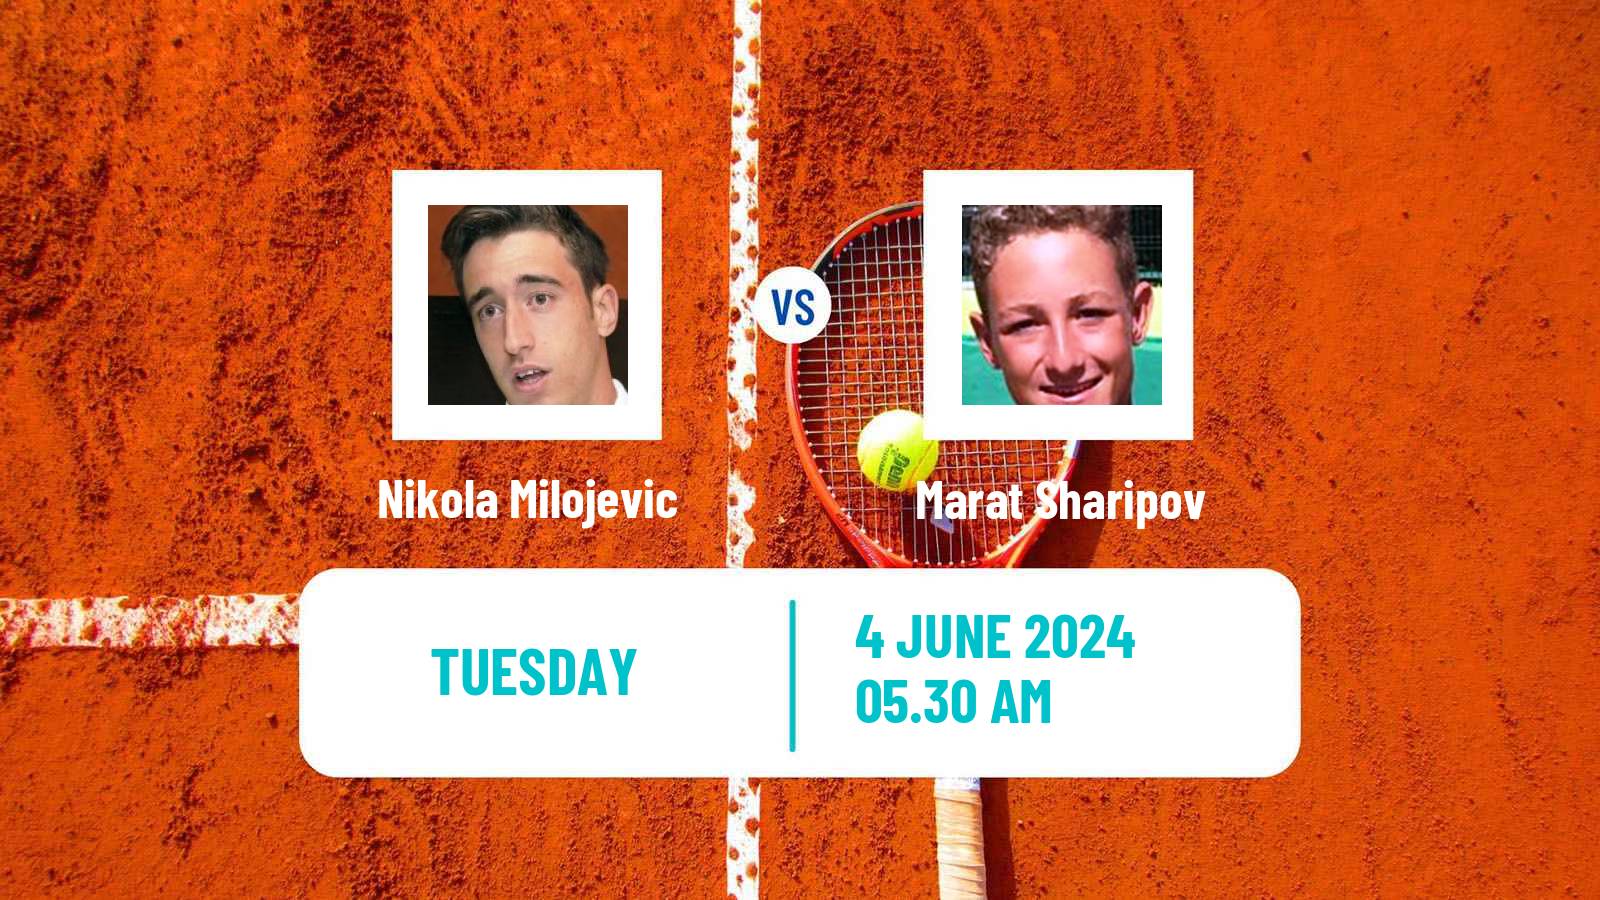 Tennis ITF M25 Kursumlijska Banja 2 Men Nikola Milojevic - Marat Sharipov